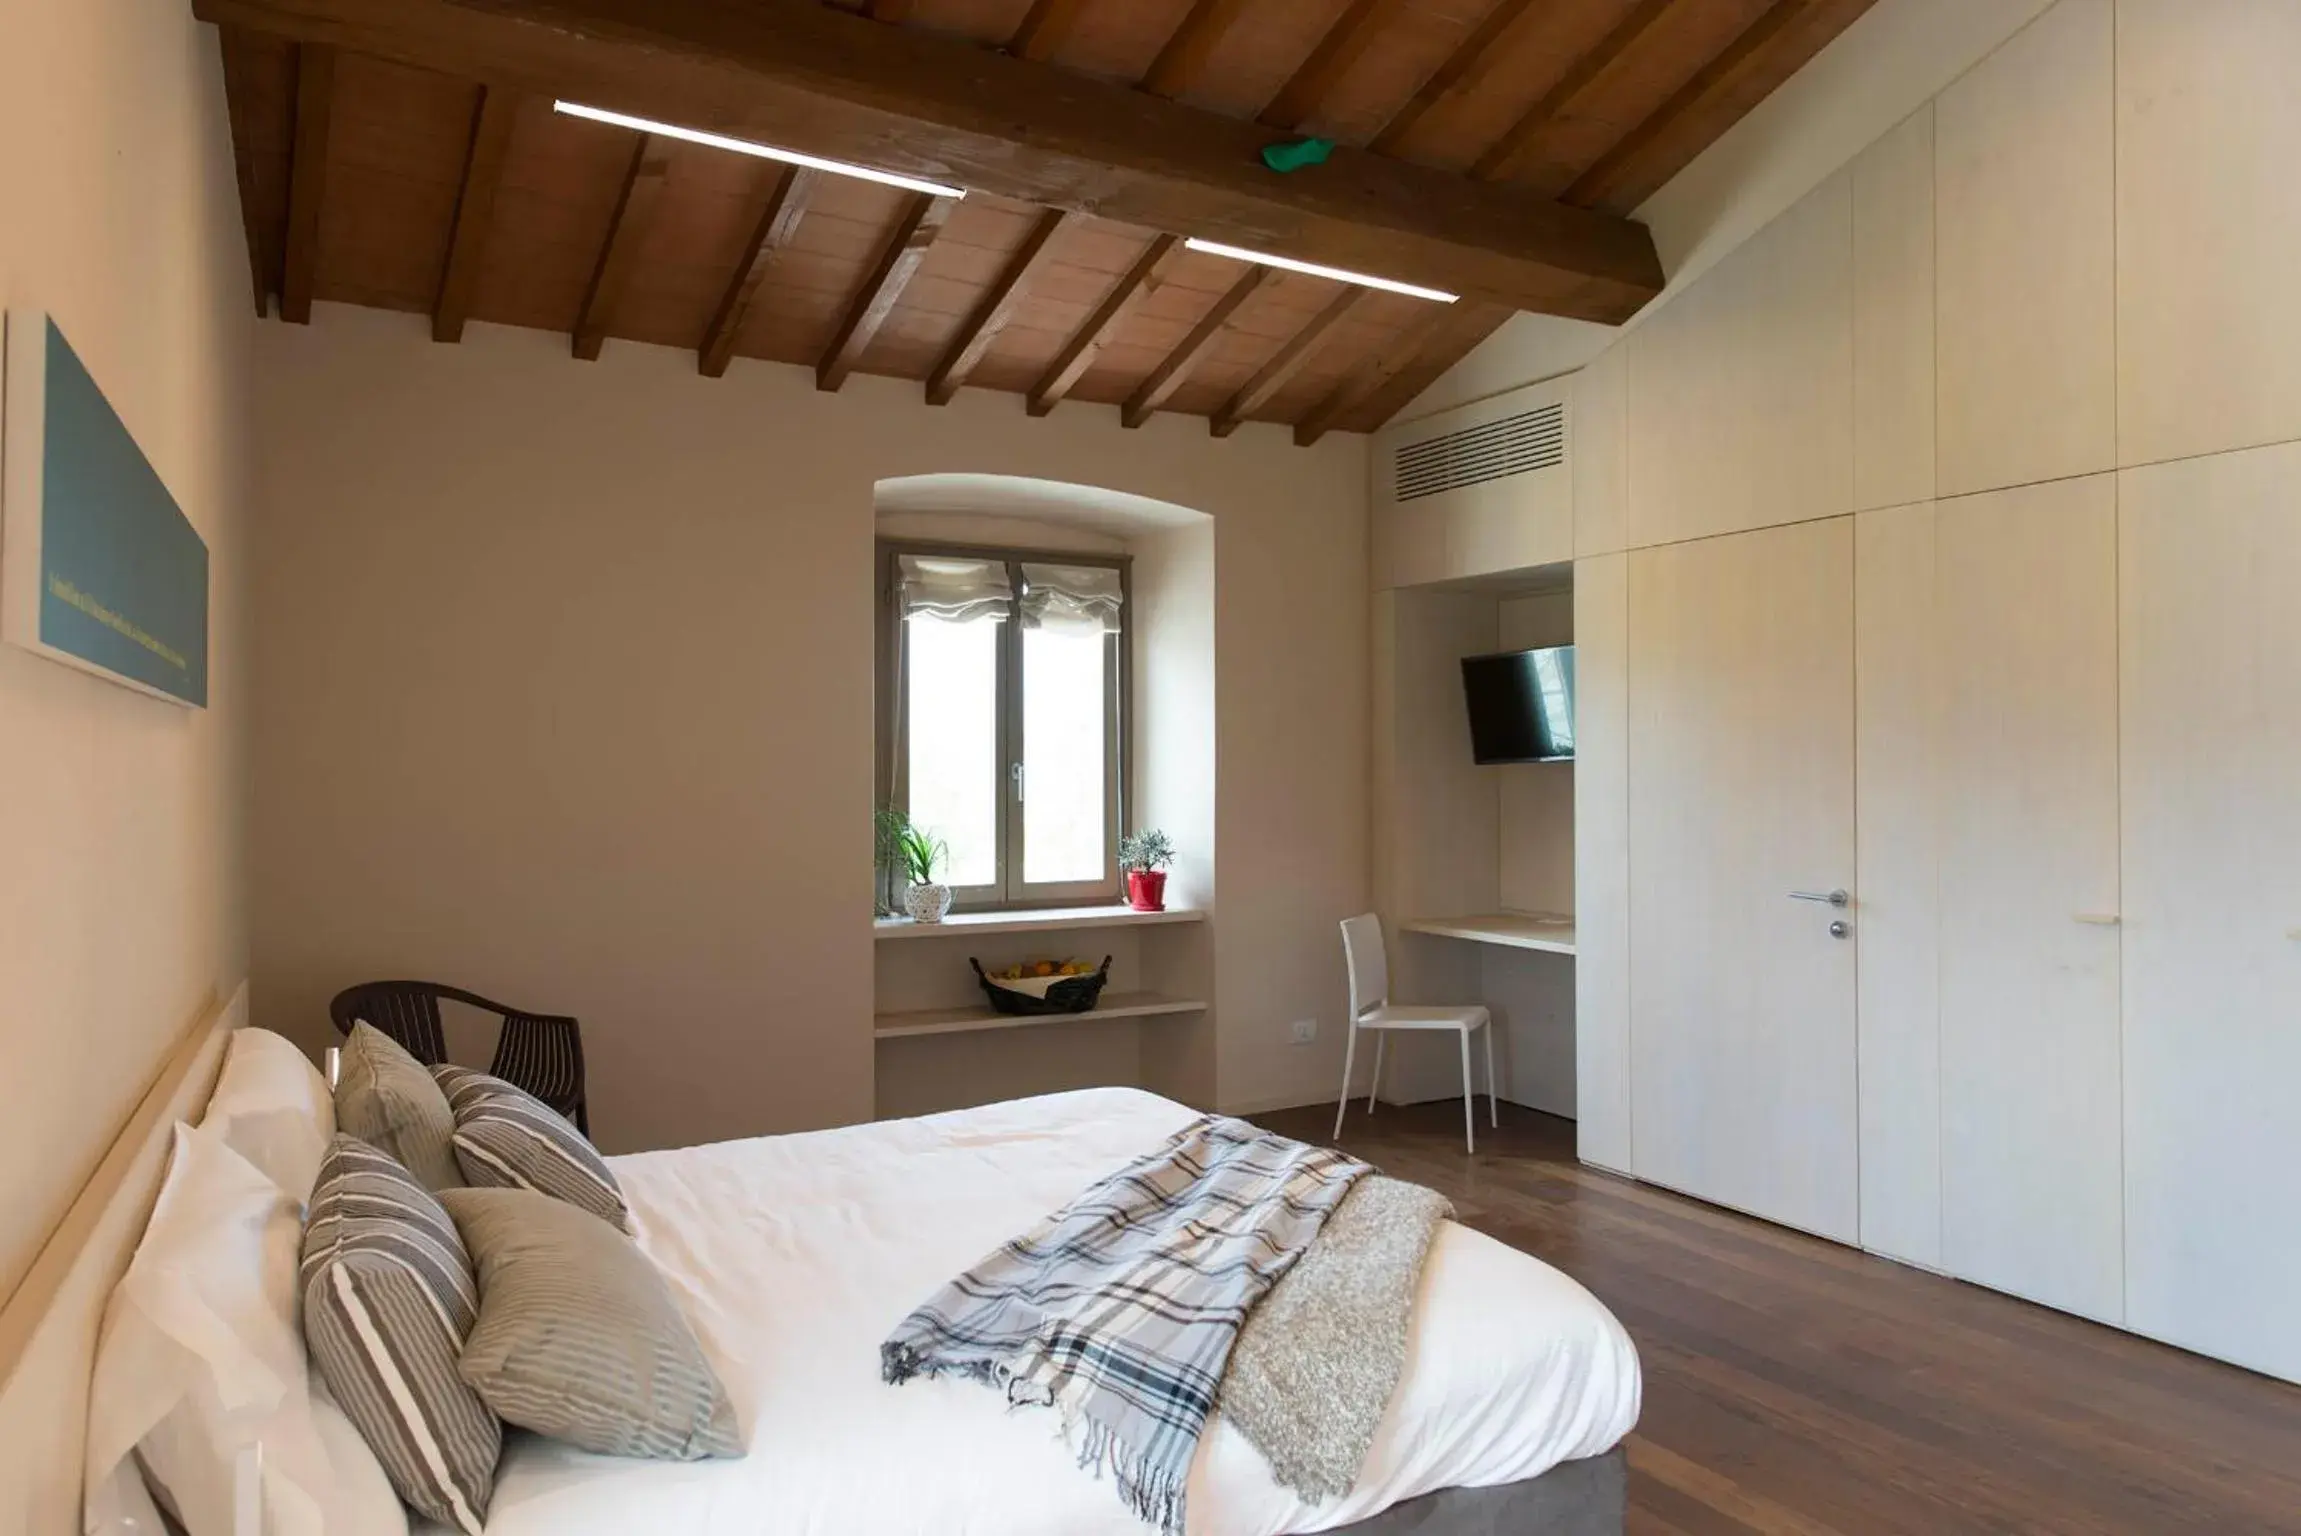 Bedroom, Room Photo in Pistoia Nursery Campus